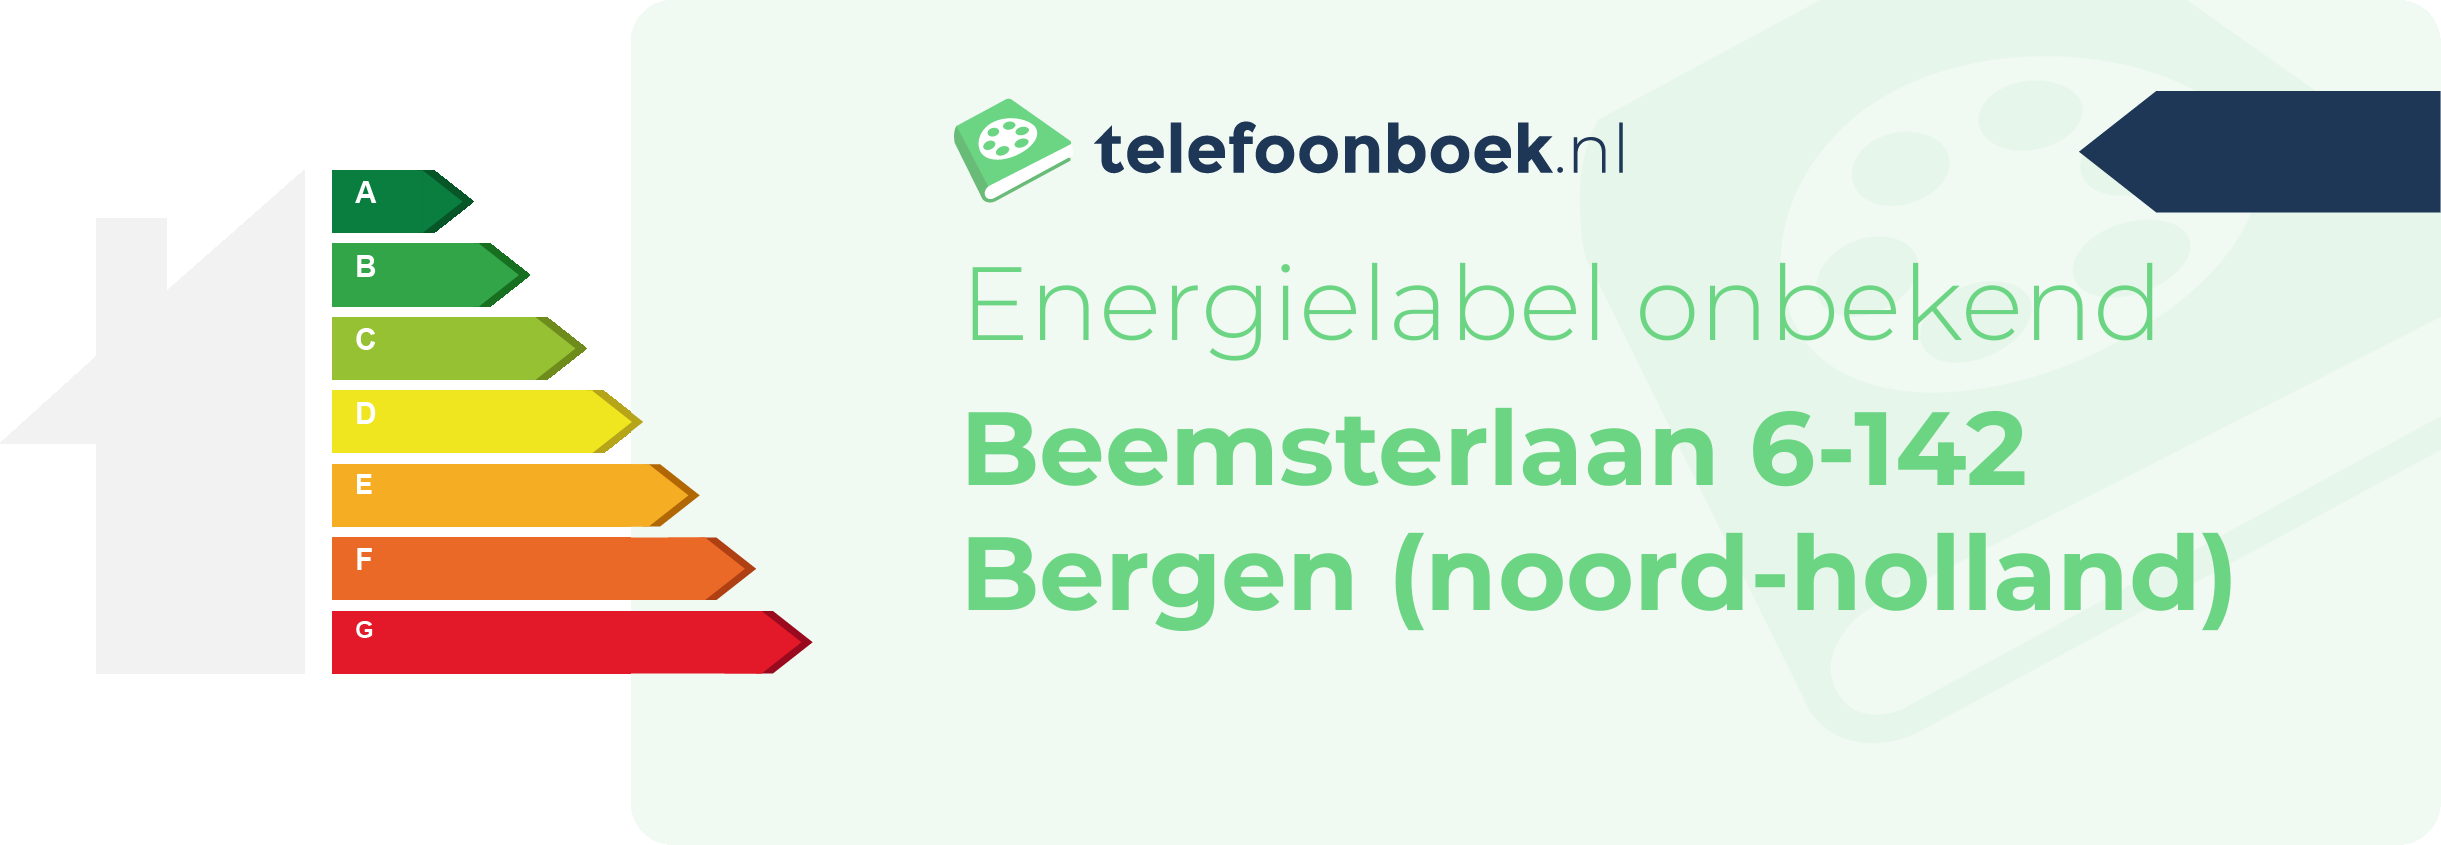 Energielabel Beemsterlaan 6-142 Bergen (Noord-Holland)